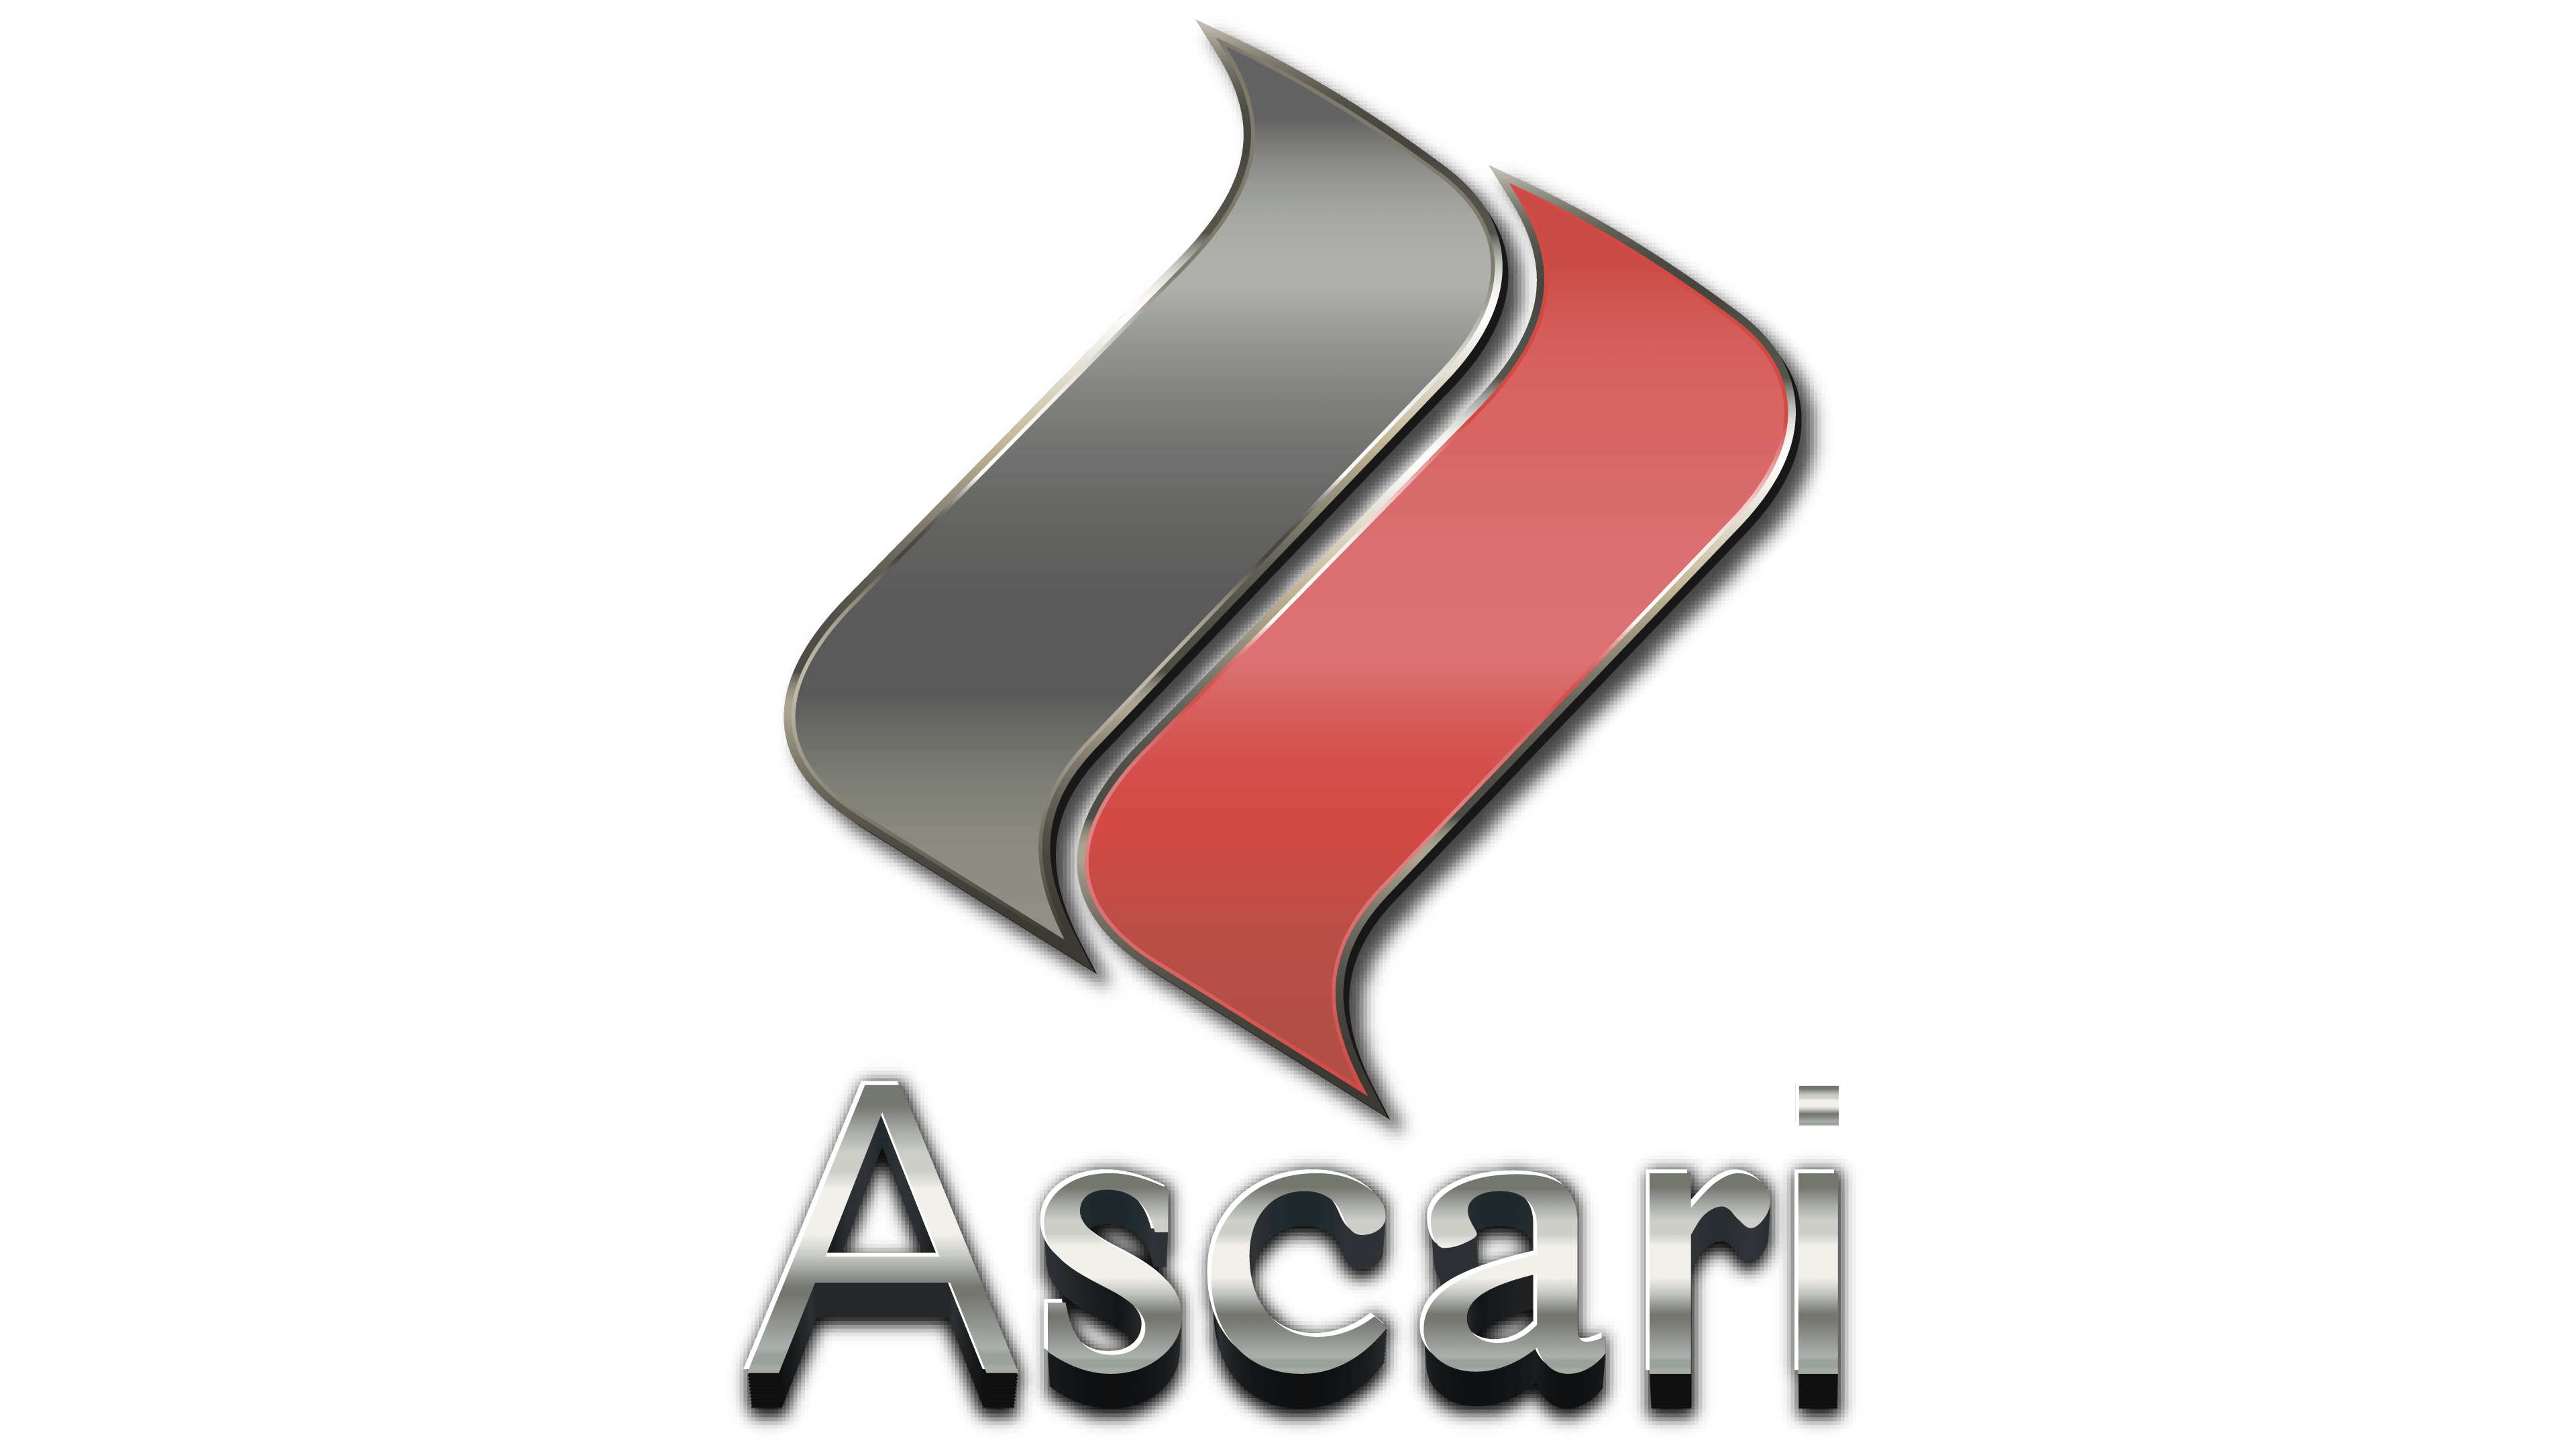 Ascari Logo - Ascari logo - 15 free online Puzzle Games on bobandsuewilliams